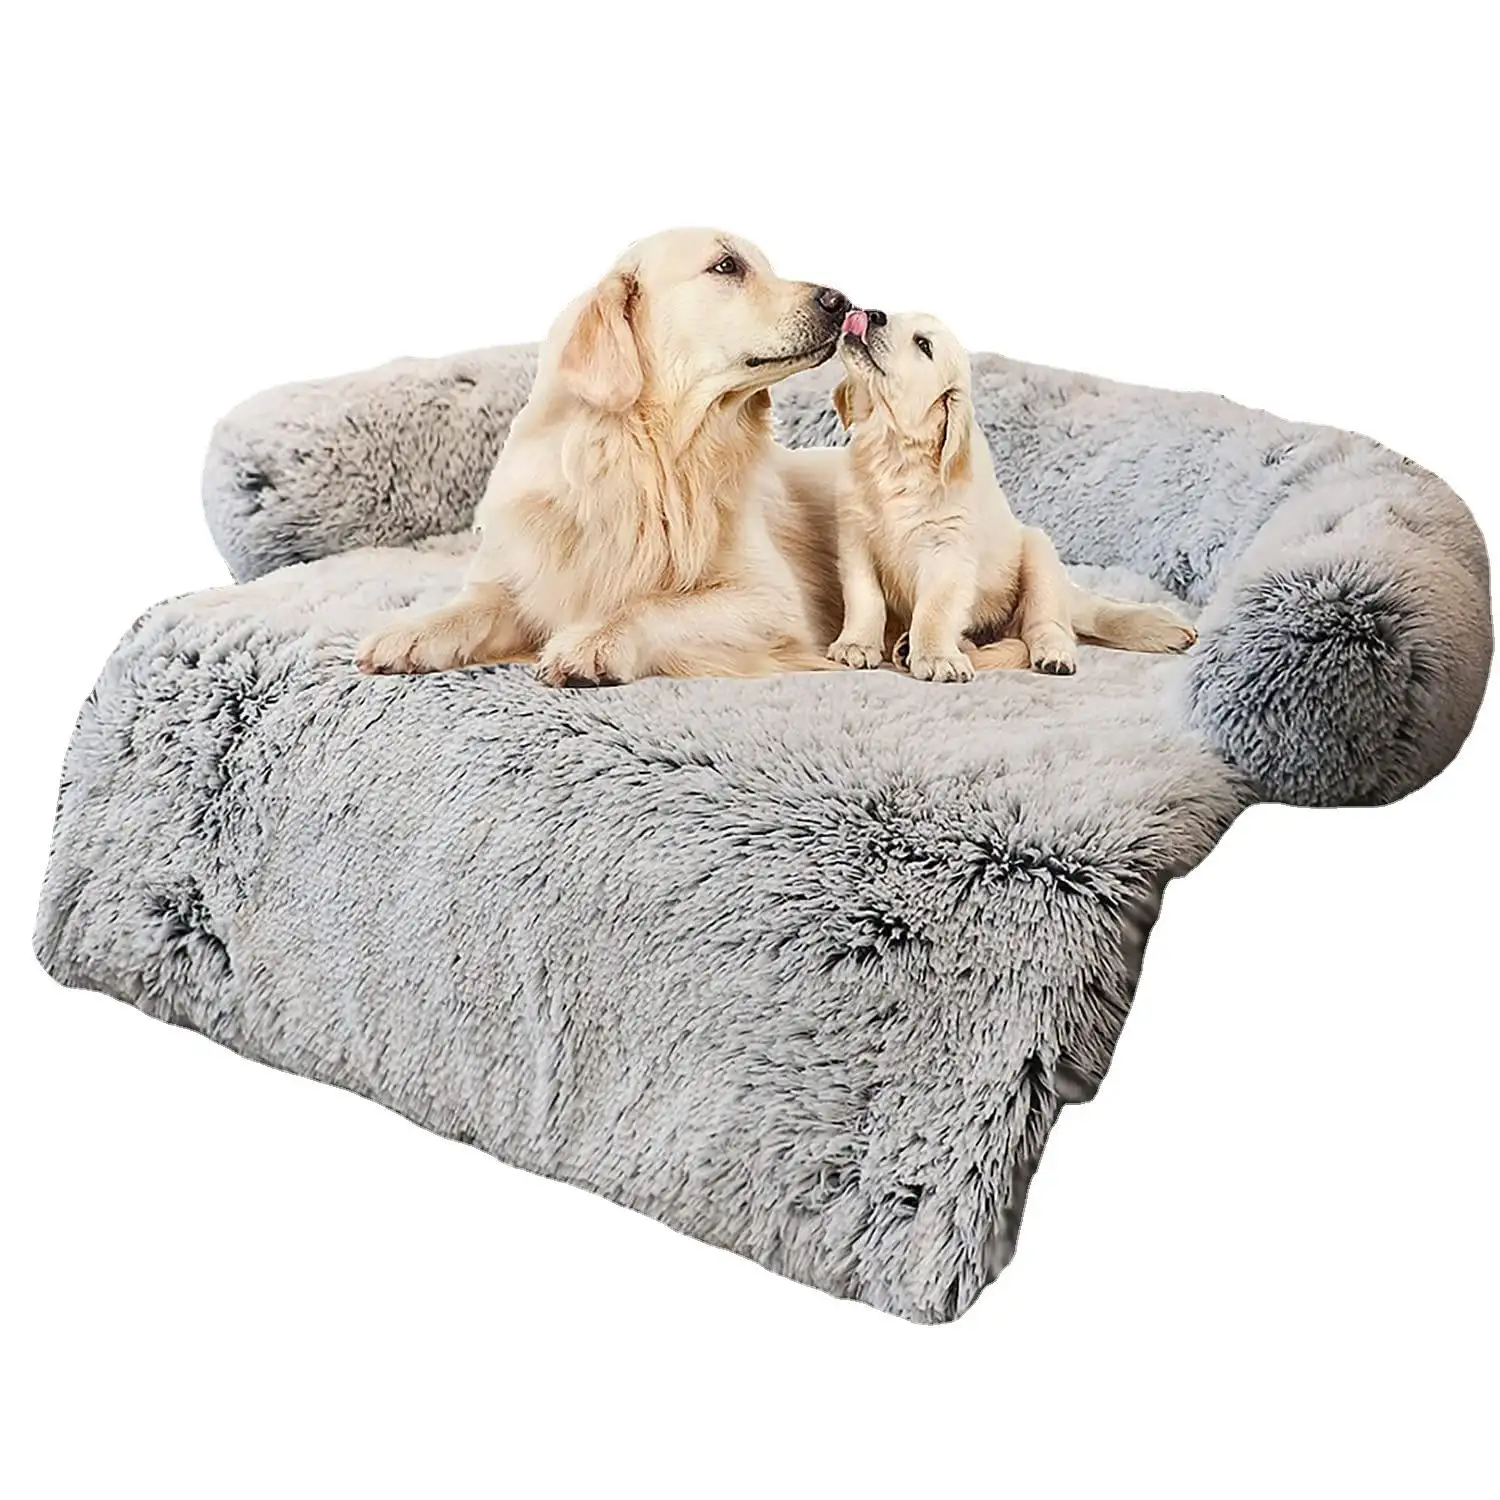 Tempat Tidur Hewan Peliharaan Mewah untuk Sofa Anjing Besar dengan Bantal Guling Leher Kucing Selimut Sarang Yang Dapat Dilepas Bantal Tempat Tidur Hewan Peliharaan